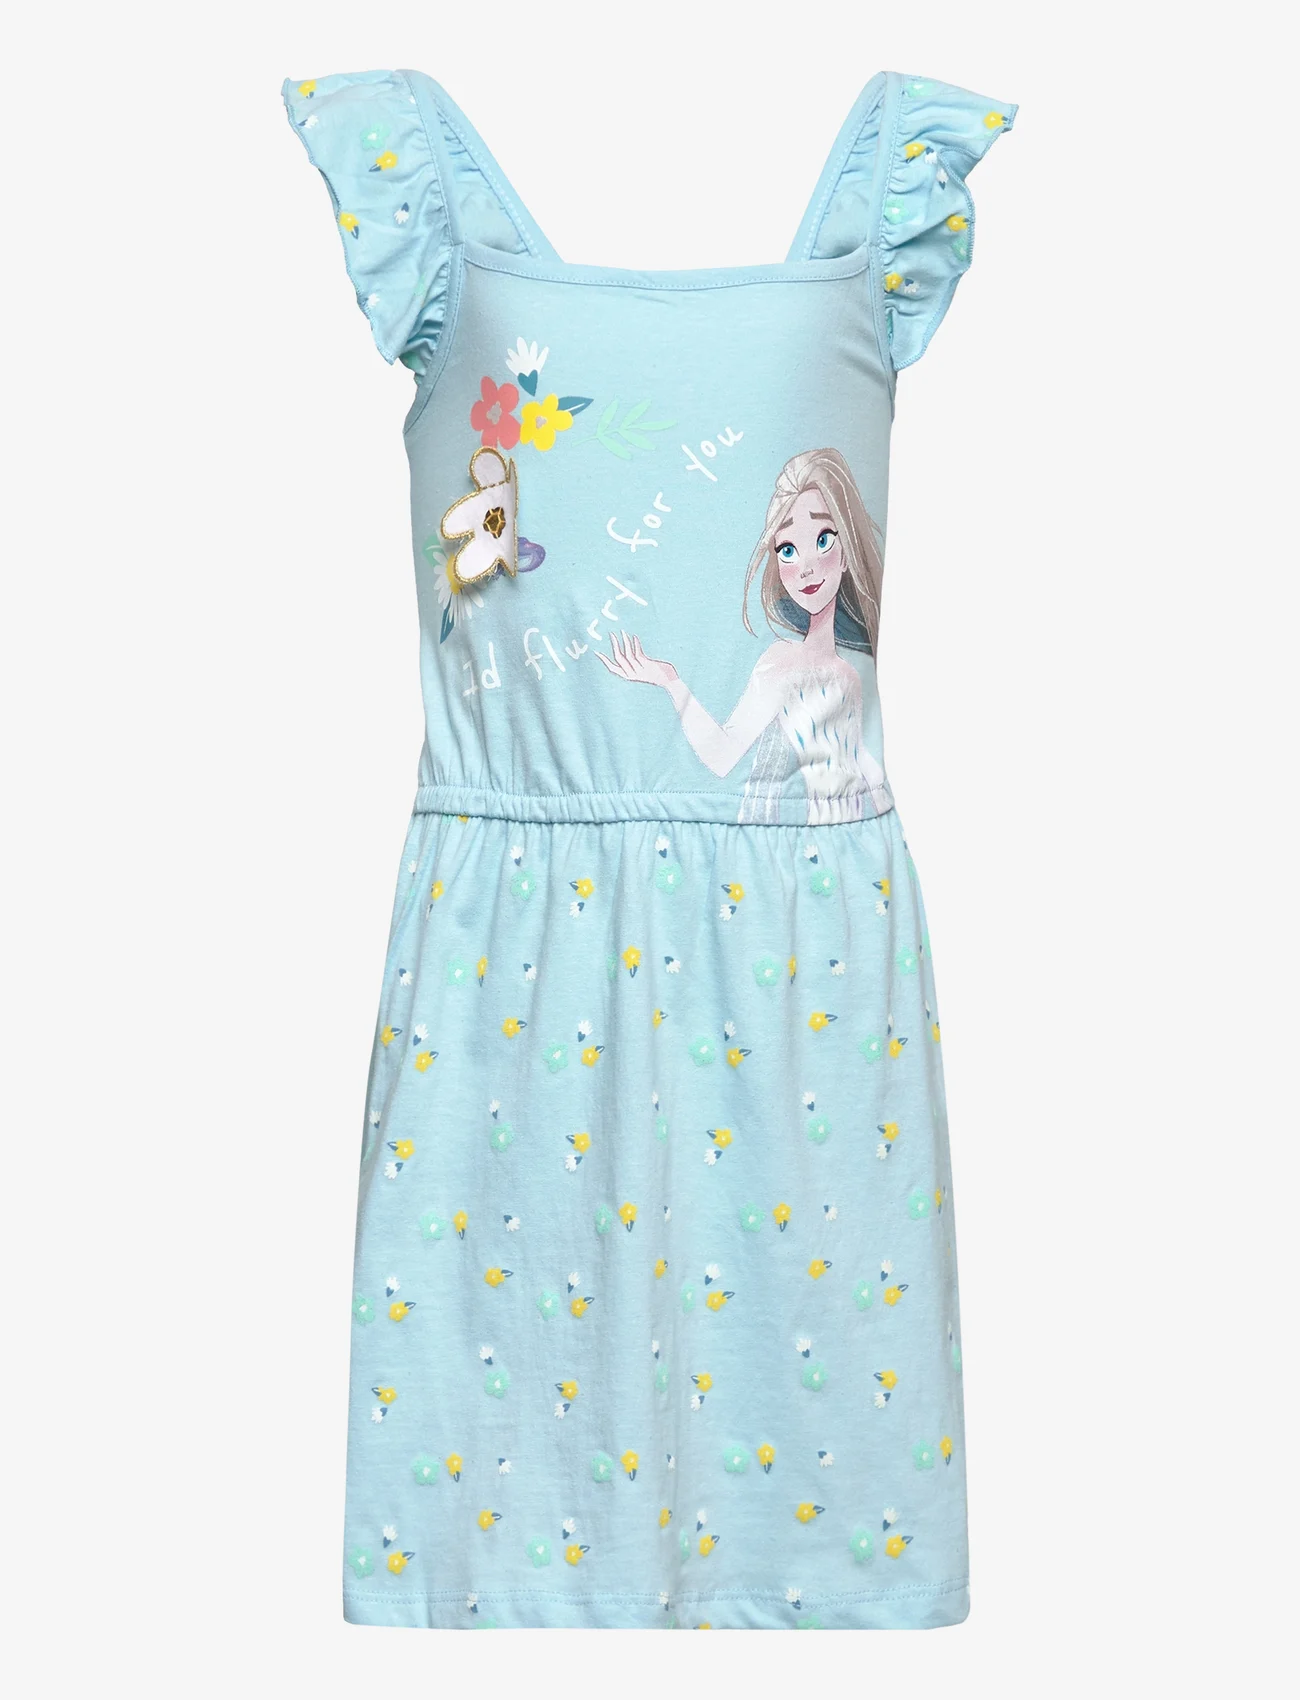 Disney - DRESS - sleeveless casual dresses - blue - 0